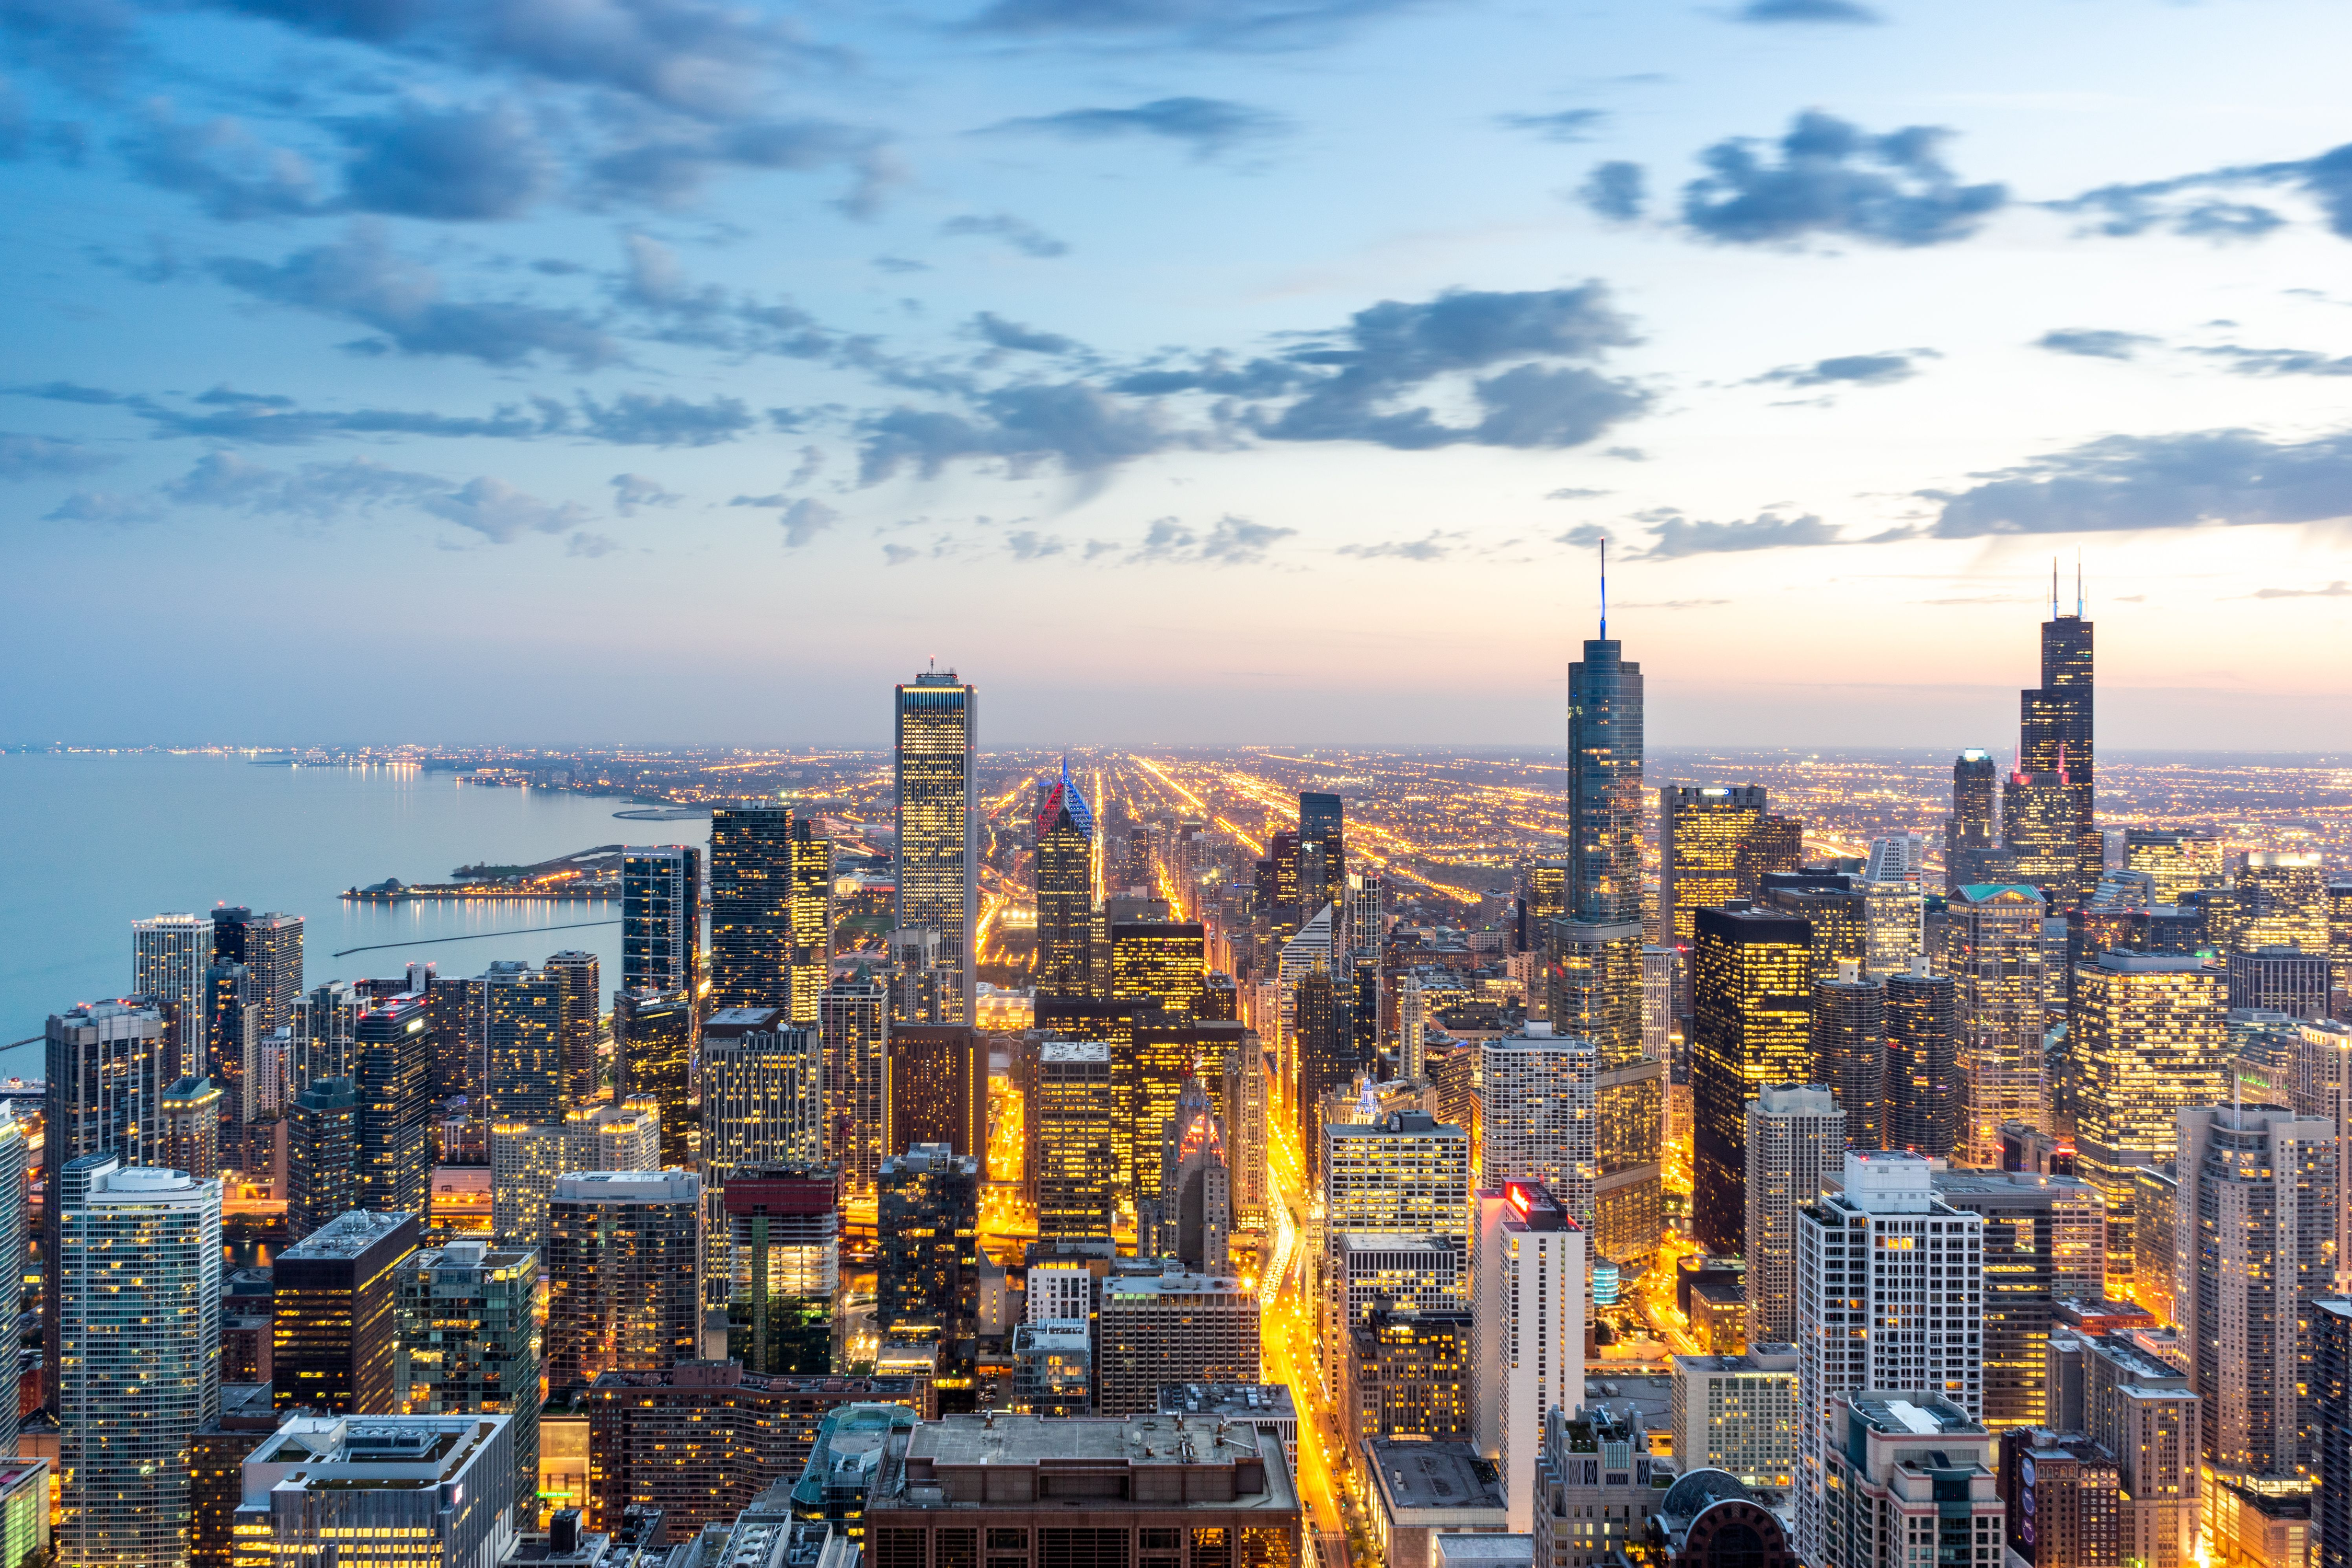 Balloon study will examine Chicago skyline's climate impact